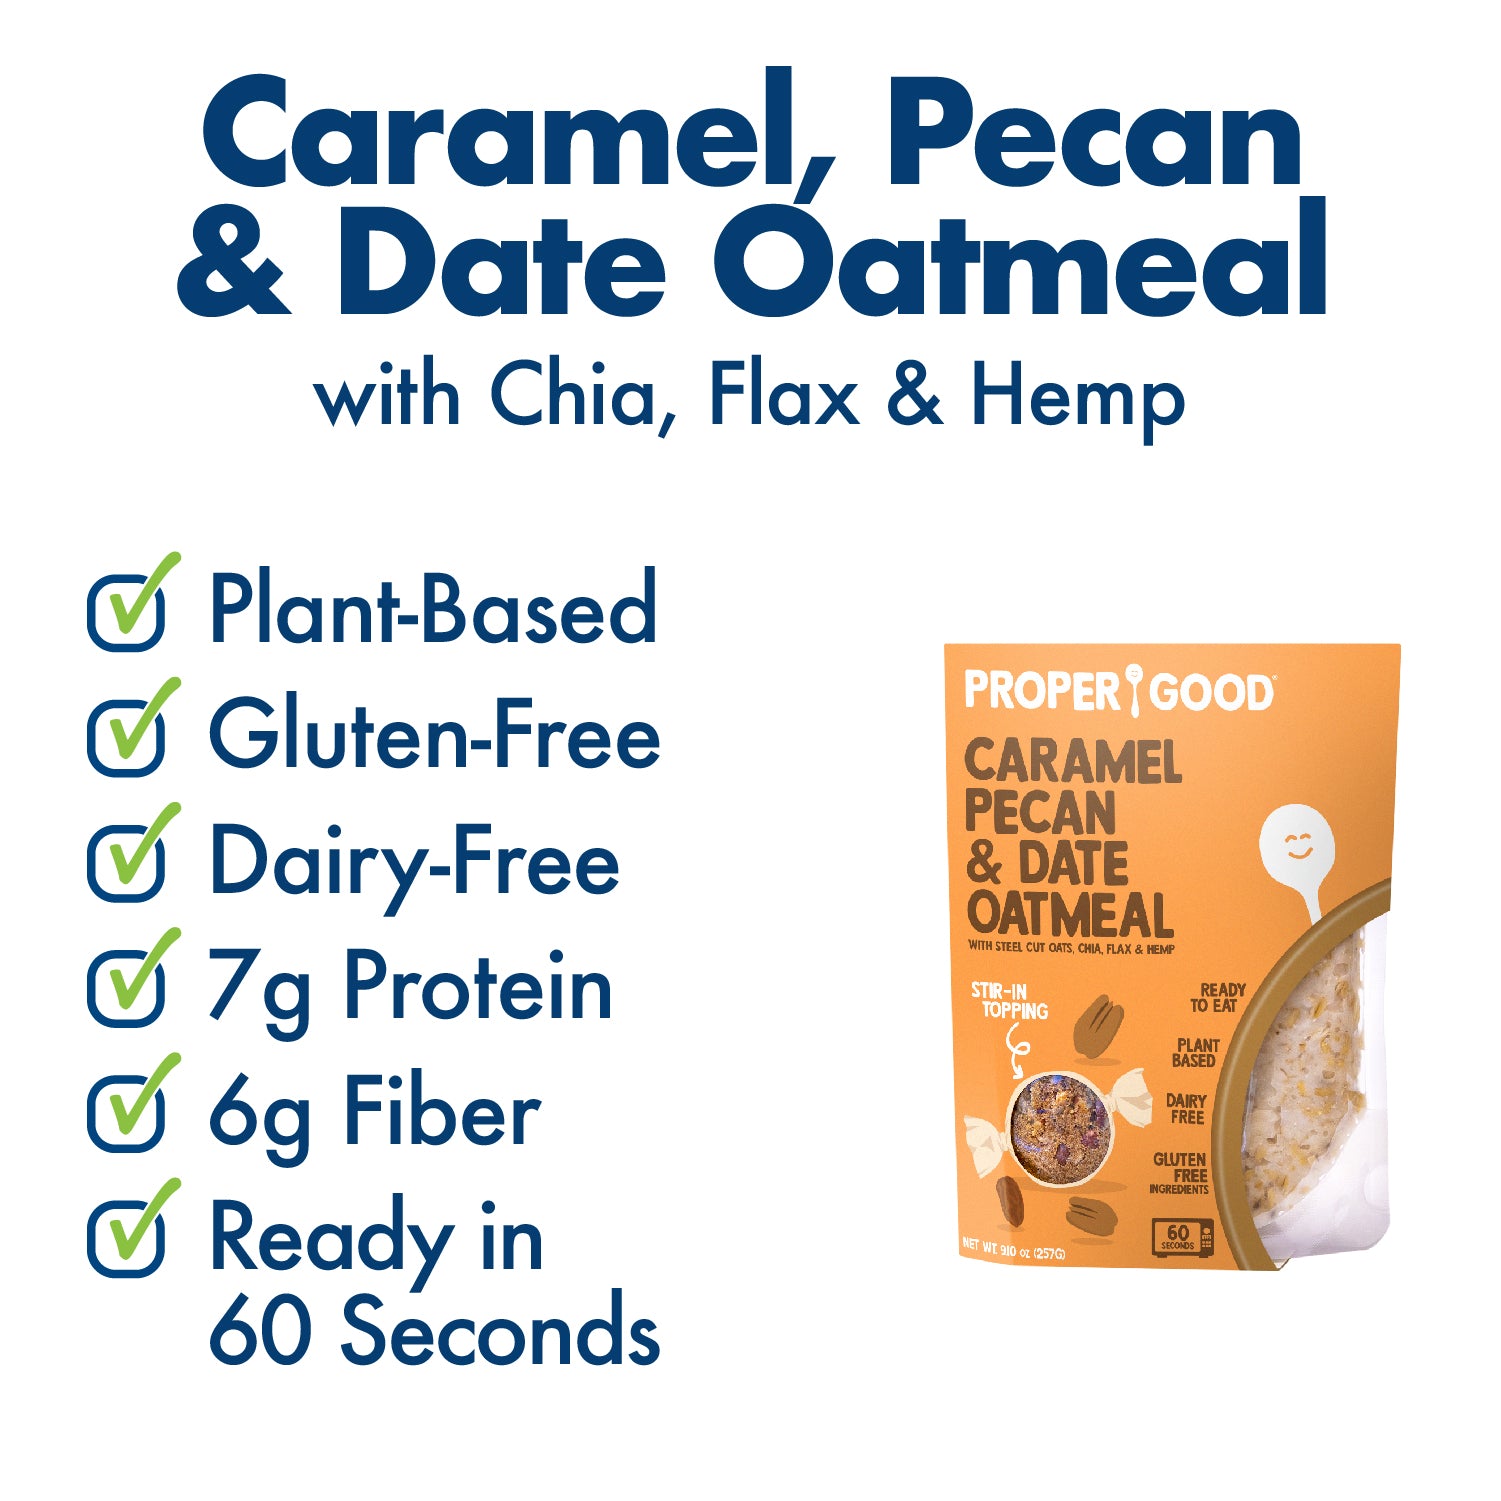 Caramel Pecan & Date Oatmeal Benefits - Eat Proper Good